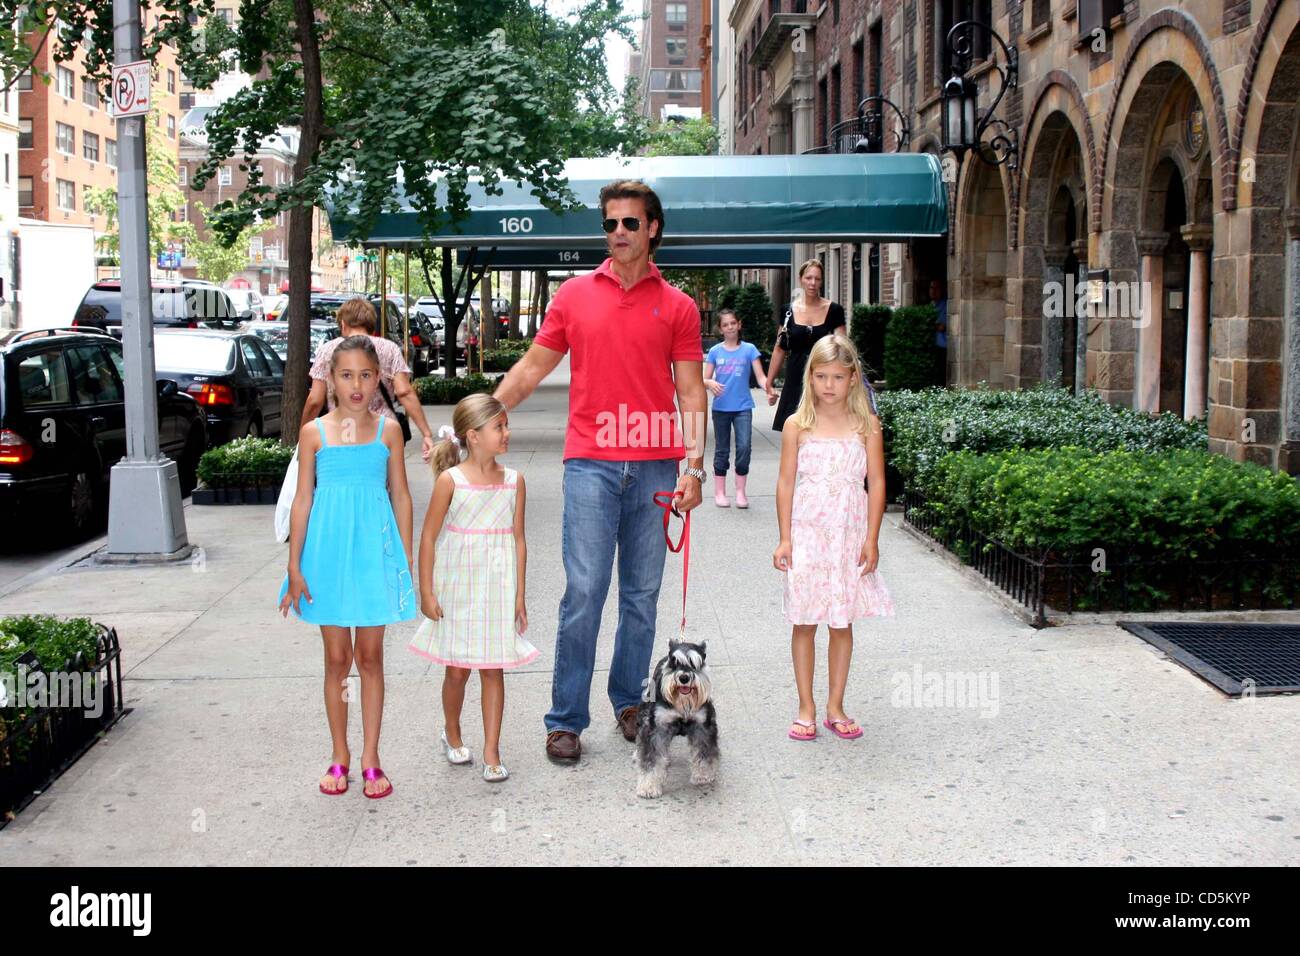 Aug. 13, 2008 - New York, New York, U.S. - EXCLUSIVE  SHOOT OF LORENZO LAMAS WITH HIS 3 DAUGHTERS, ALEXANDRA LAMAS, 10- VICTORIA LAMAS, 9 - ISABELLA LAMAS, 7 & DOG MAXI..LOCATION: NEW YORK New York  08-13-2008.  -   2008.K59139JBU(Credit Image: Â© Judie Burstein/Globe Photos/ZUMAPRESS.com) Stock Photo